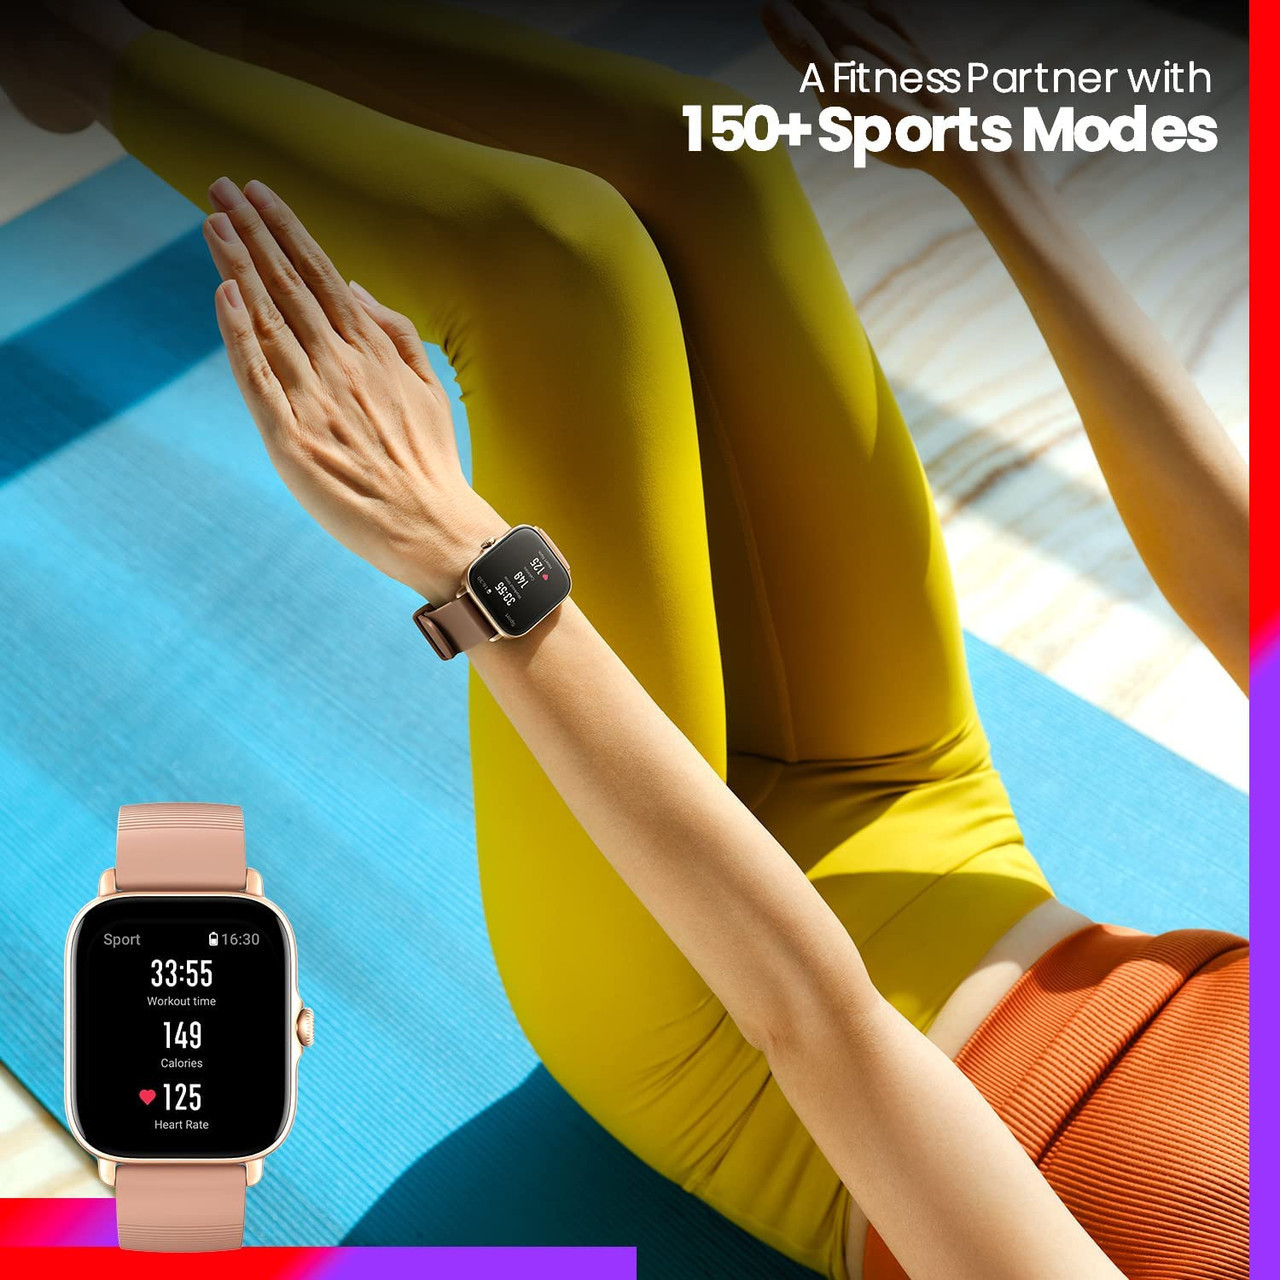 Amazfit GTS 4 Smartwatch(150+ Sports Modes, Super Slim & Light weight, –  ALL IT Hypermarket